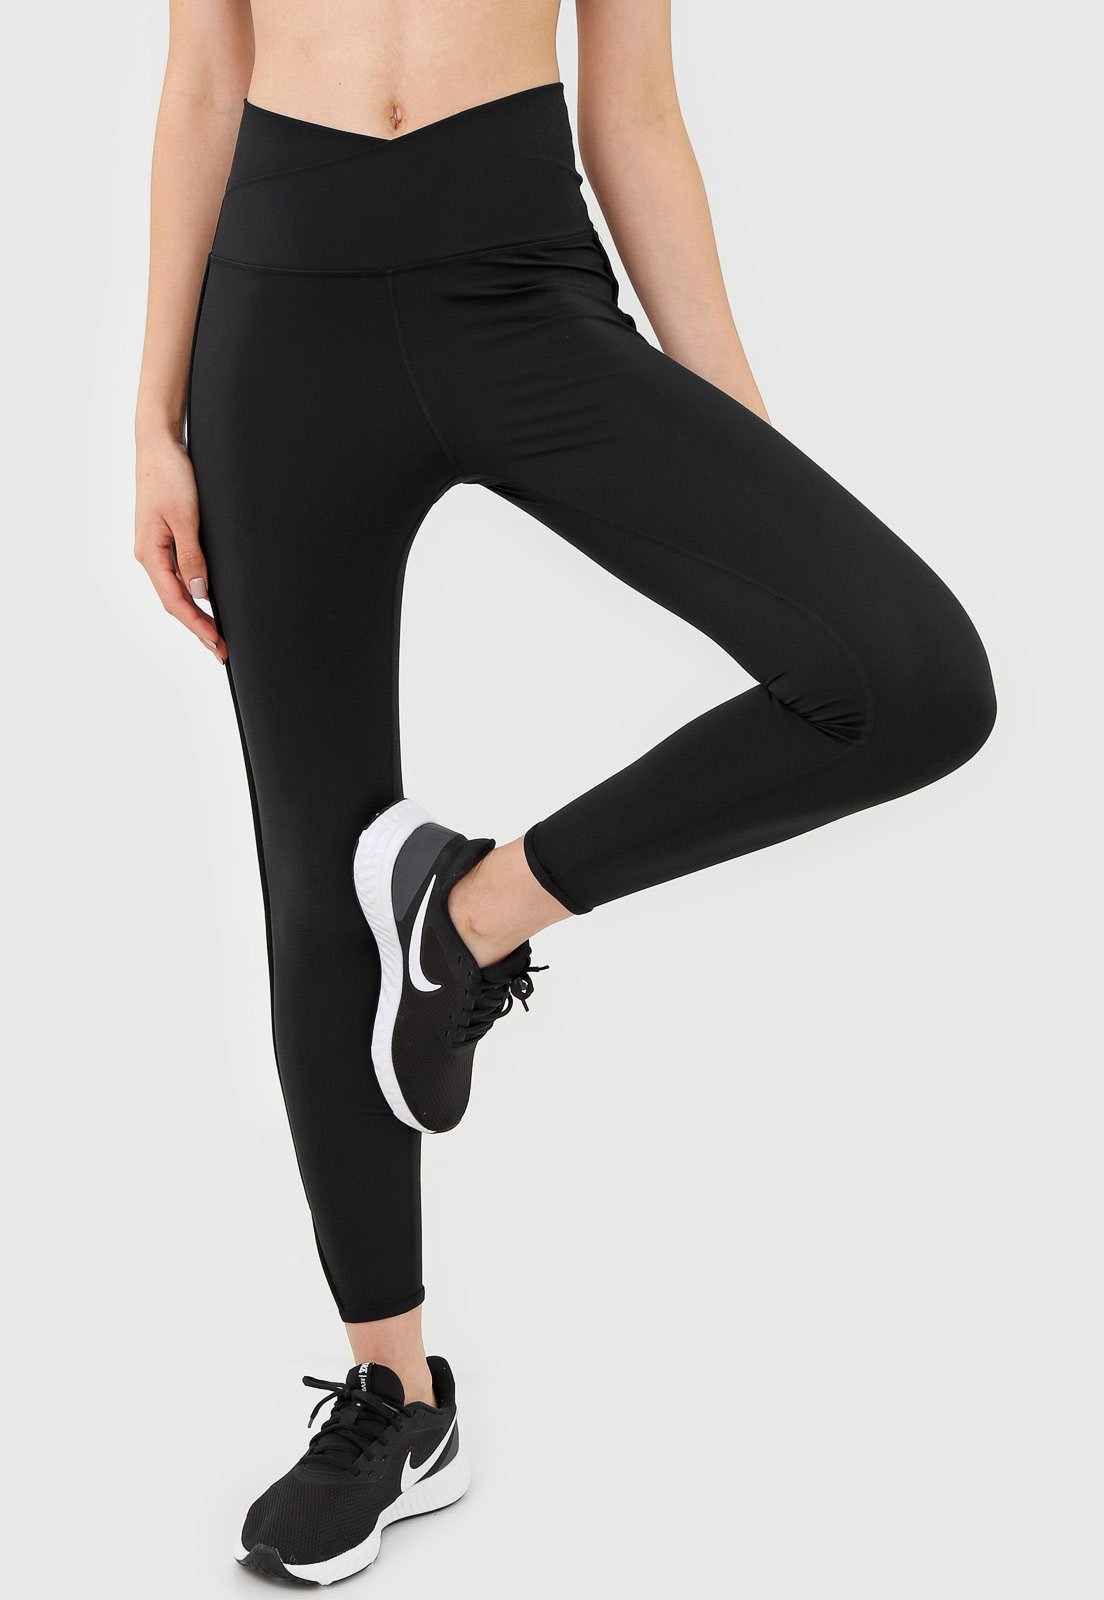 https://static.dafiti.com.br/p/Nike-Legging-Nike-Yoga-Core-Cln-Preta-7863-1637746-1-zoom.jpg